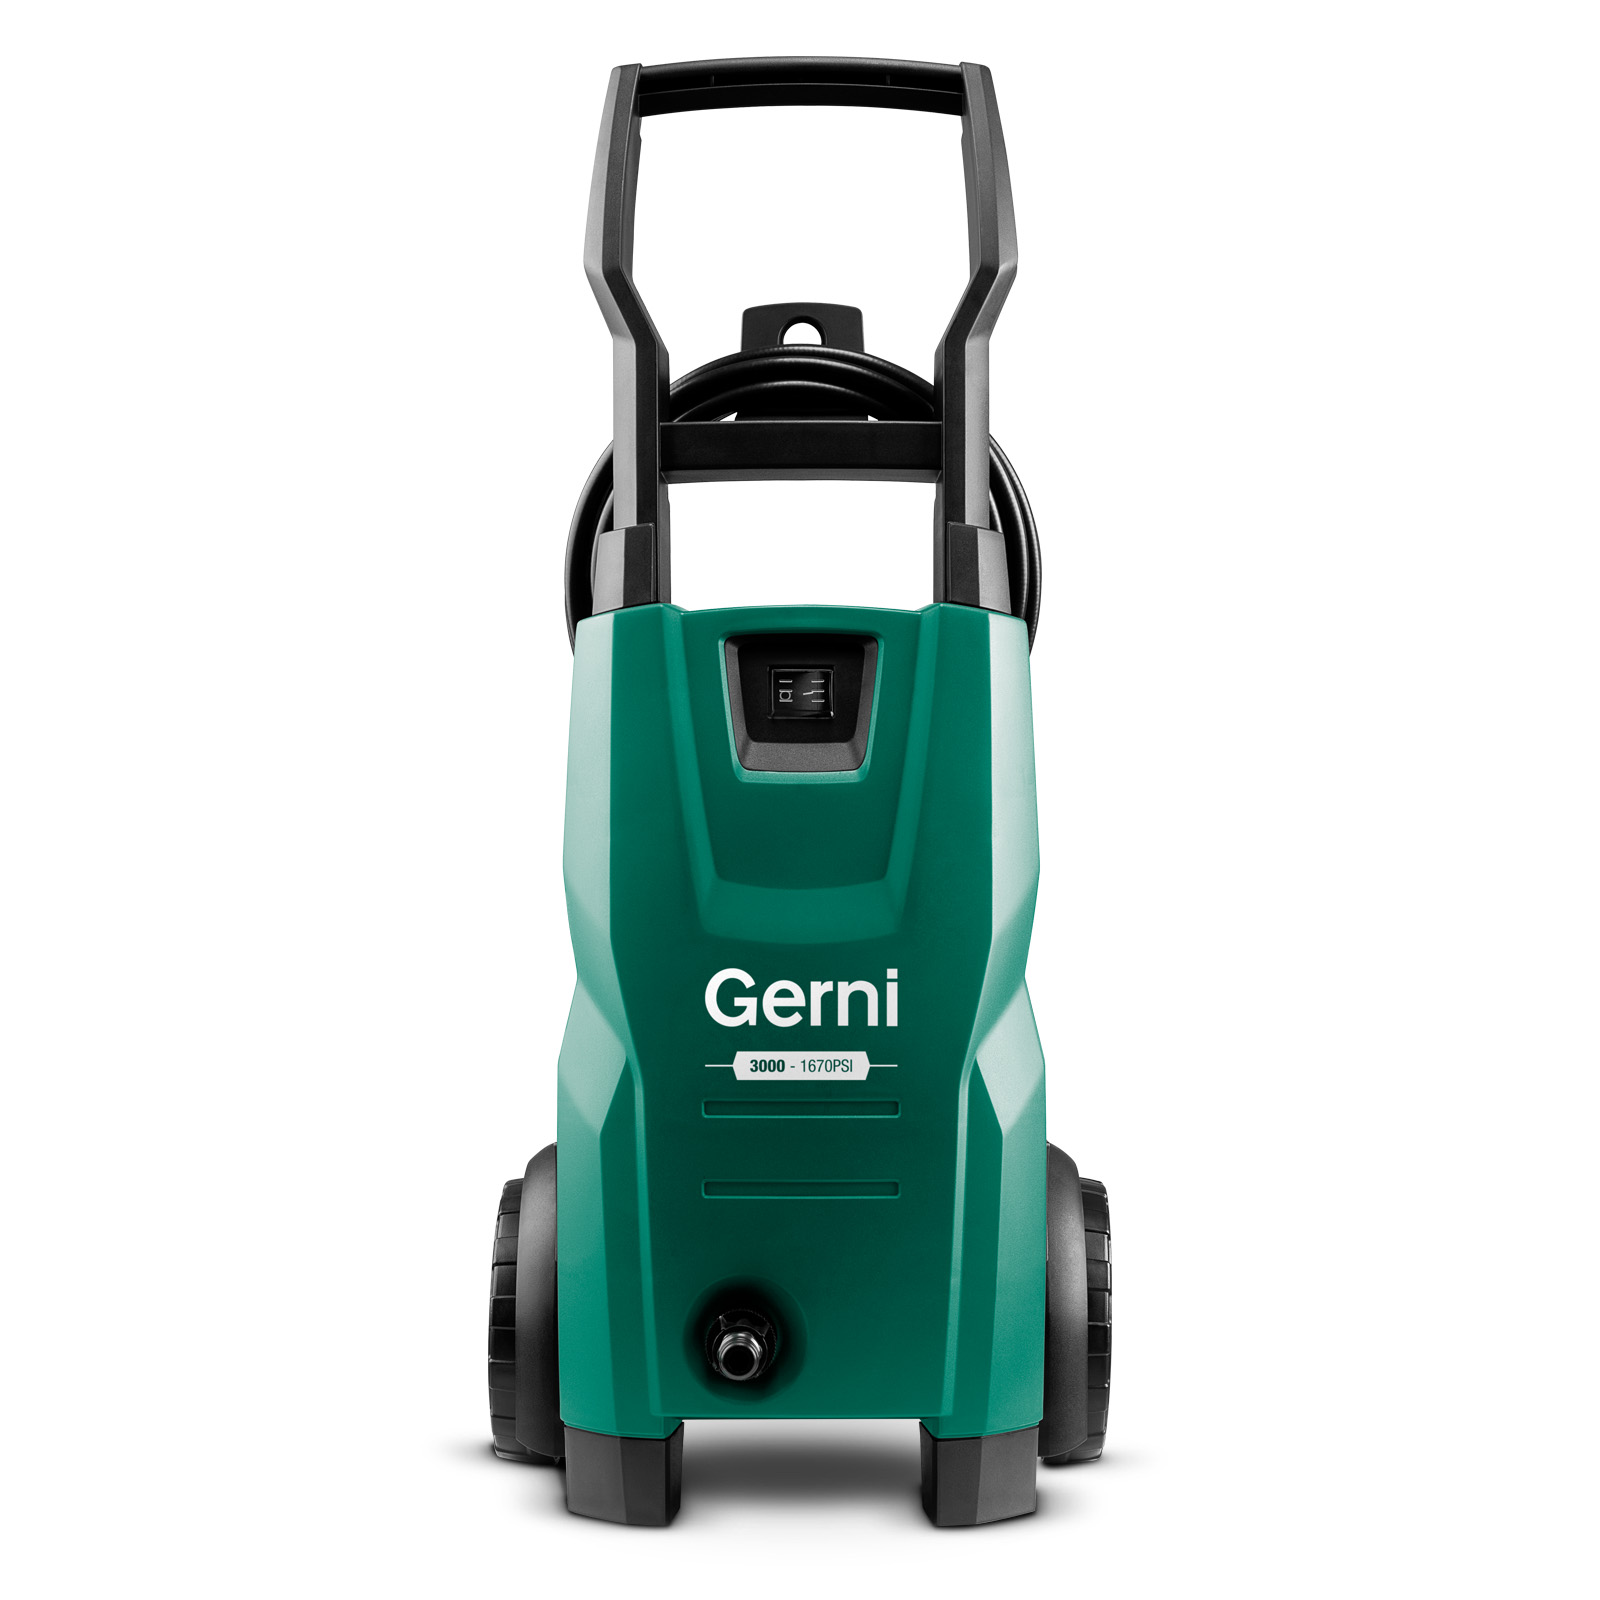 Gerni 3000 - Gerni High Pressure Washer with Accessories